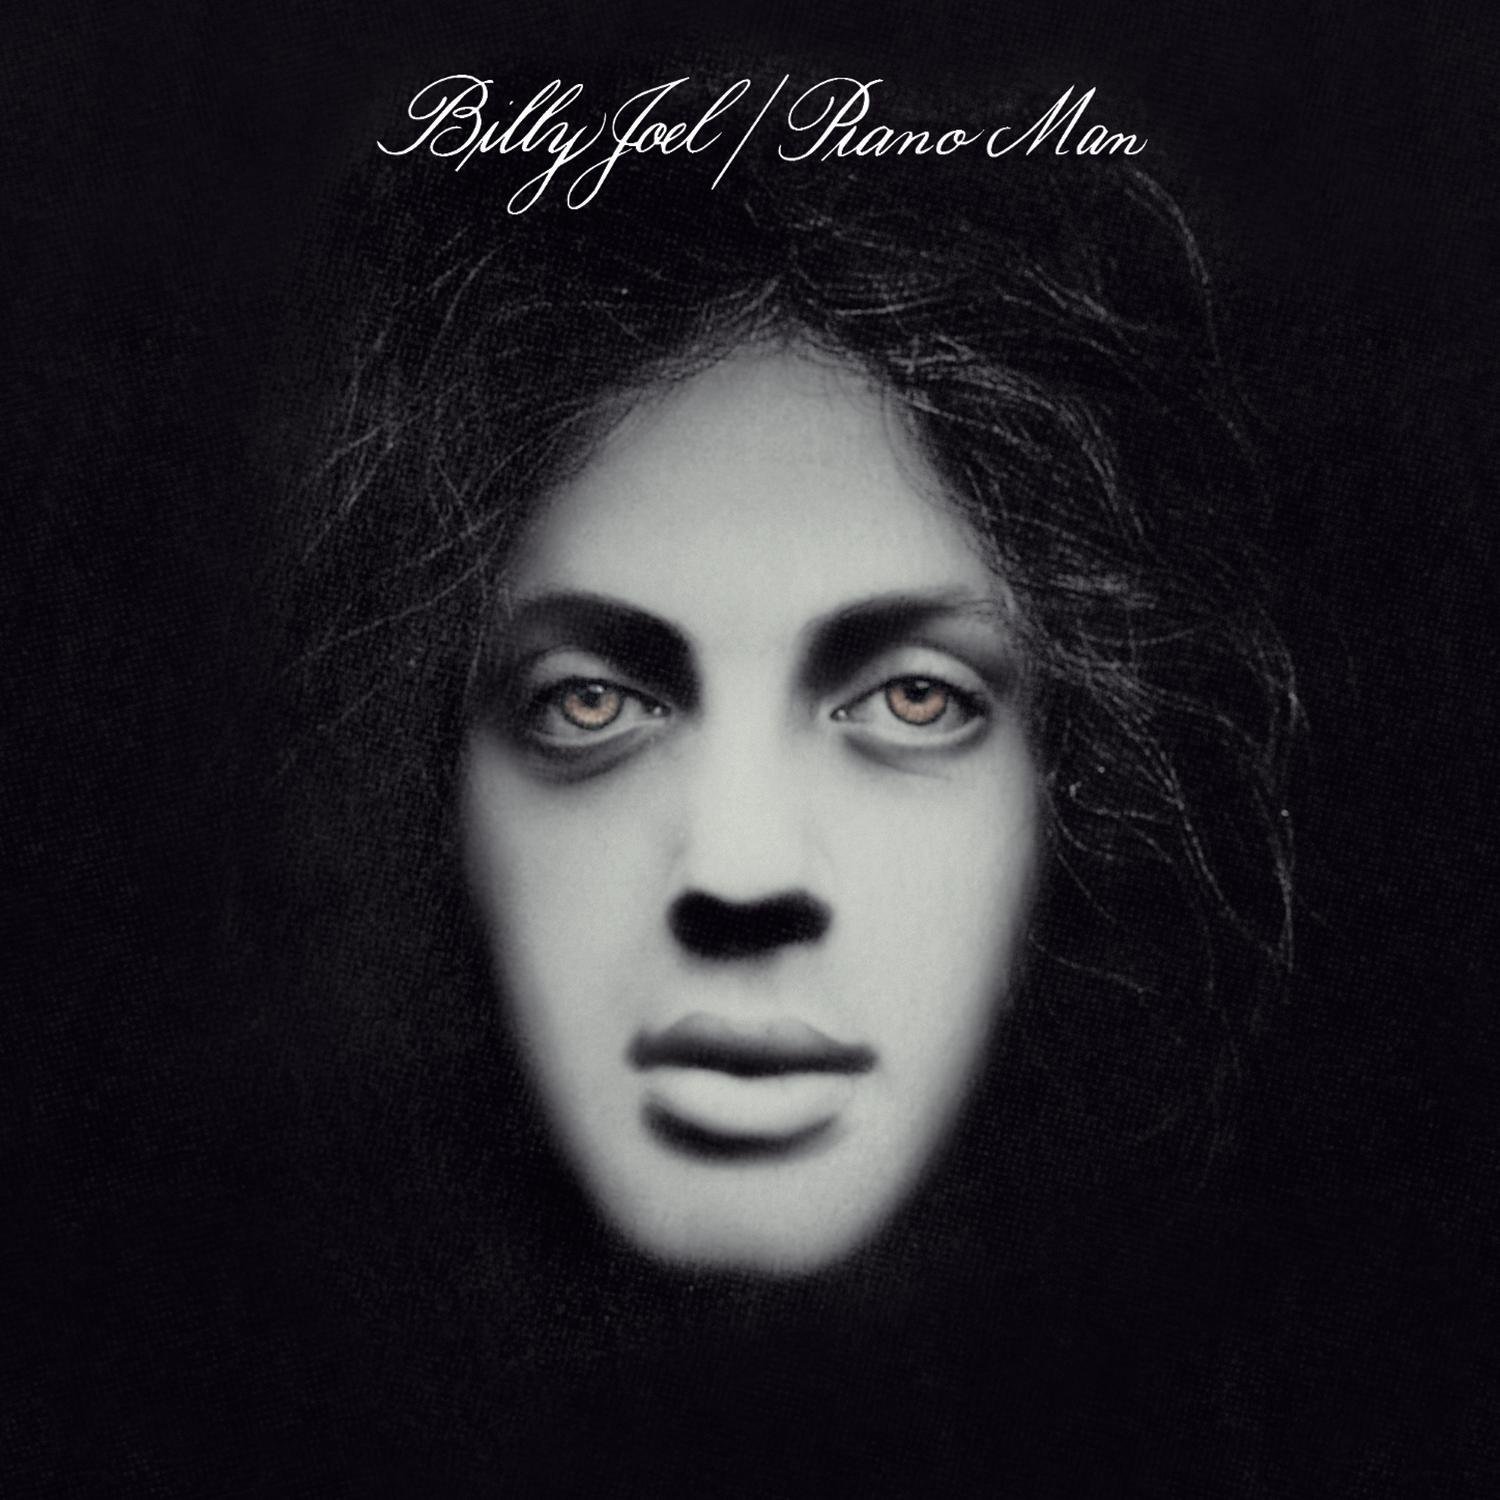 Billy Joel - Piano Man - Amazon.com Music